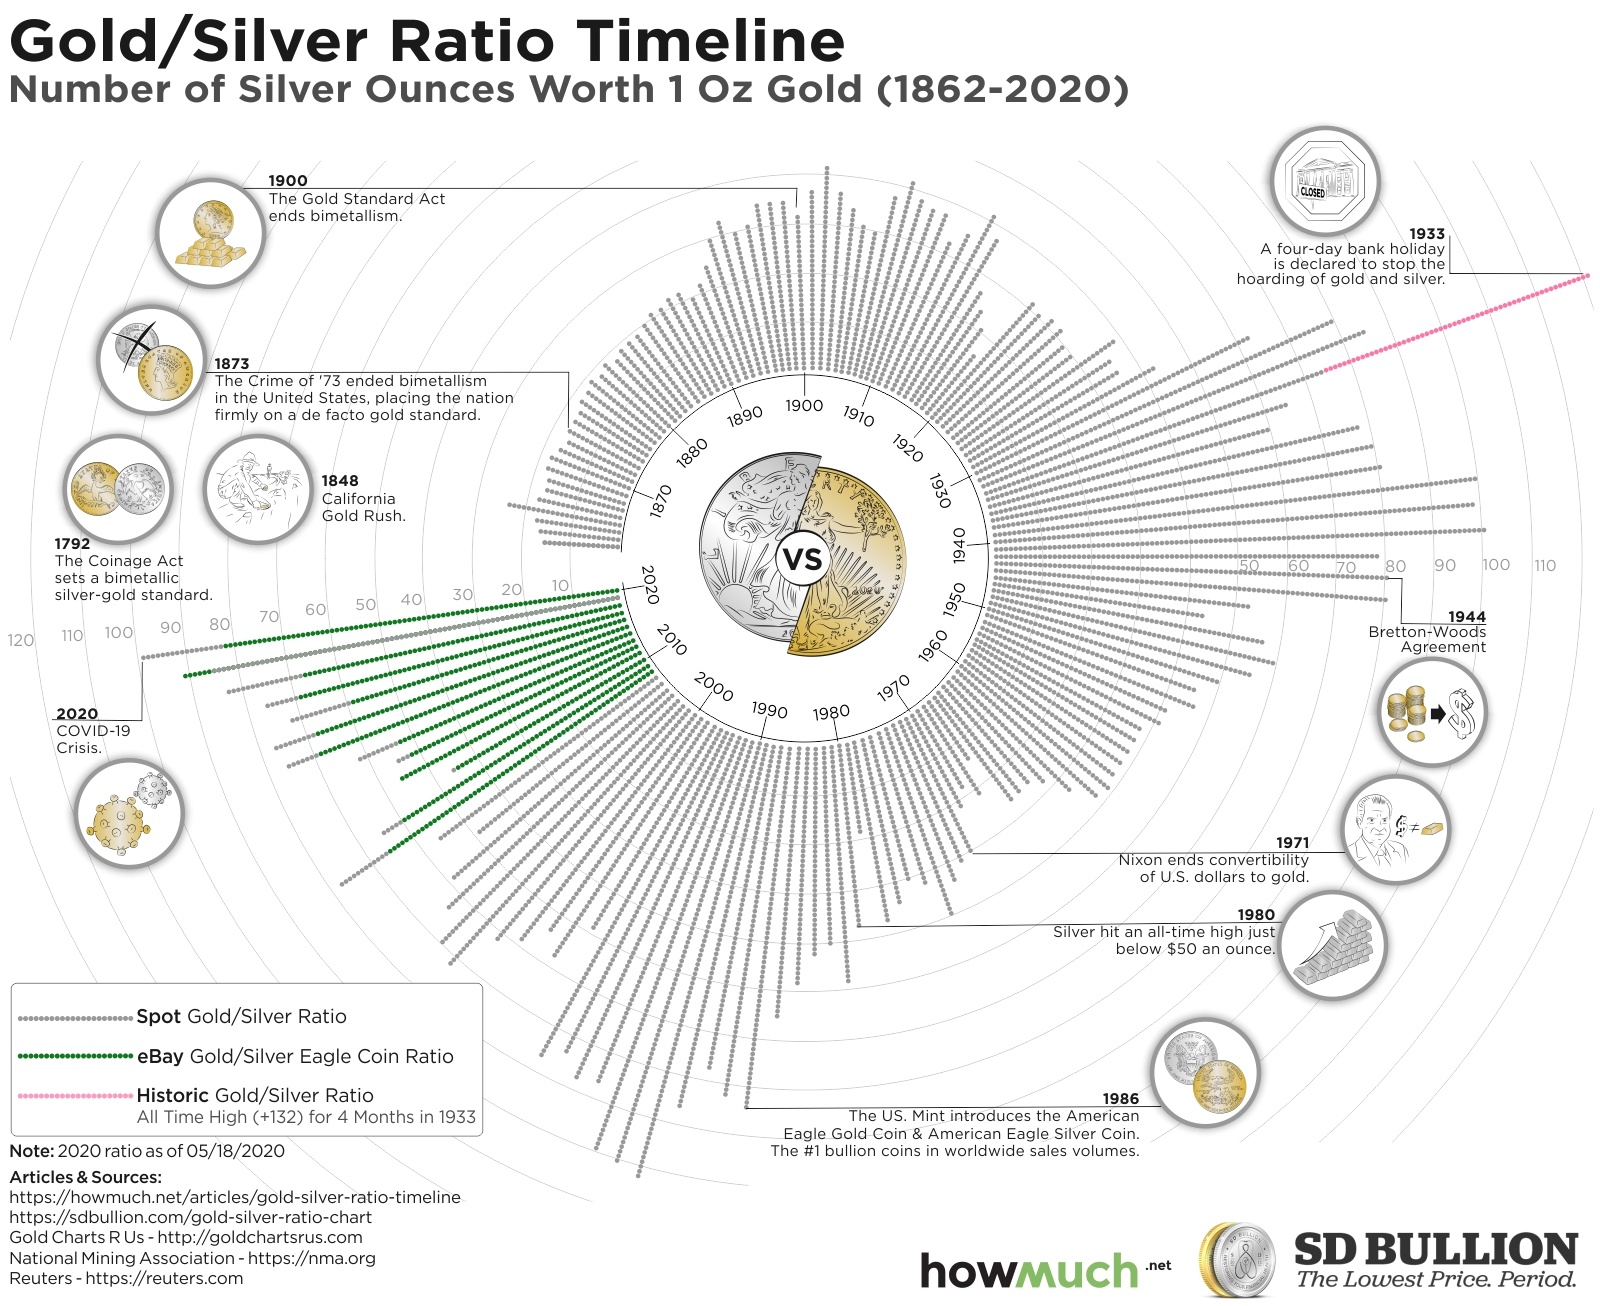 GoldSilver-Ratio-Timeline.jpg